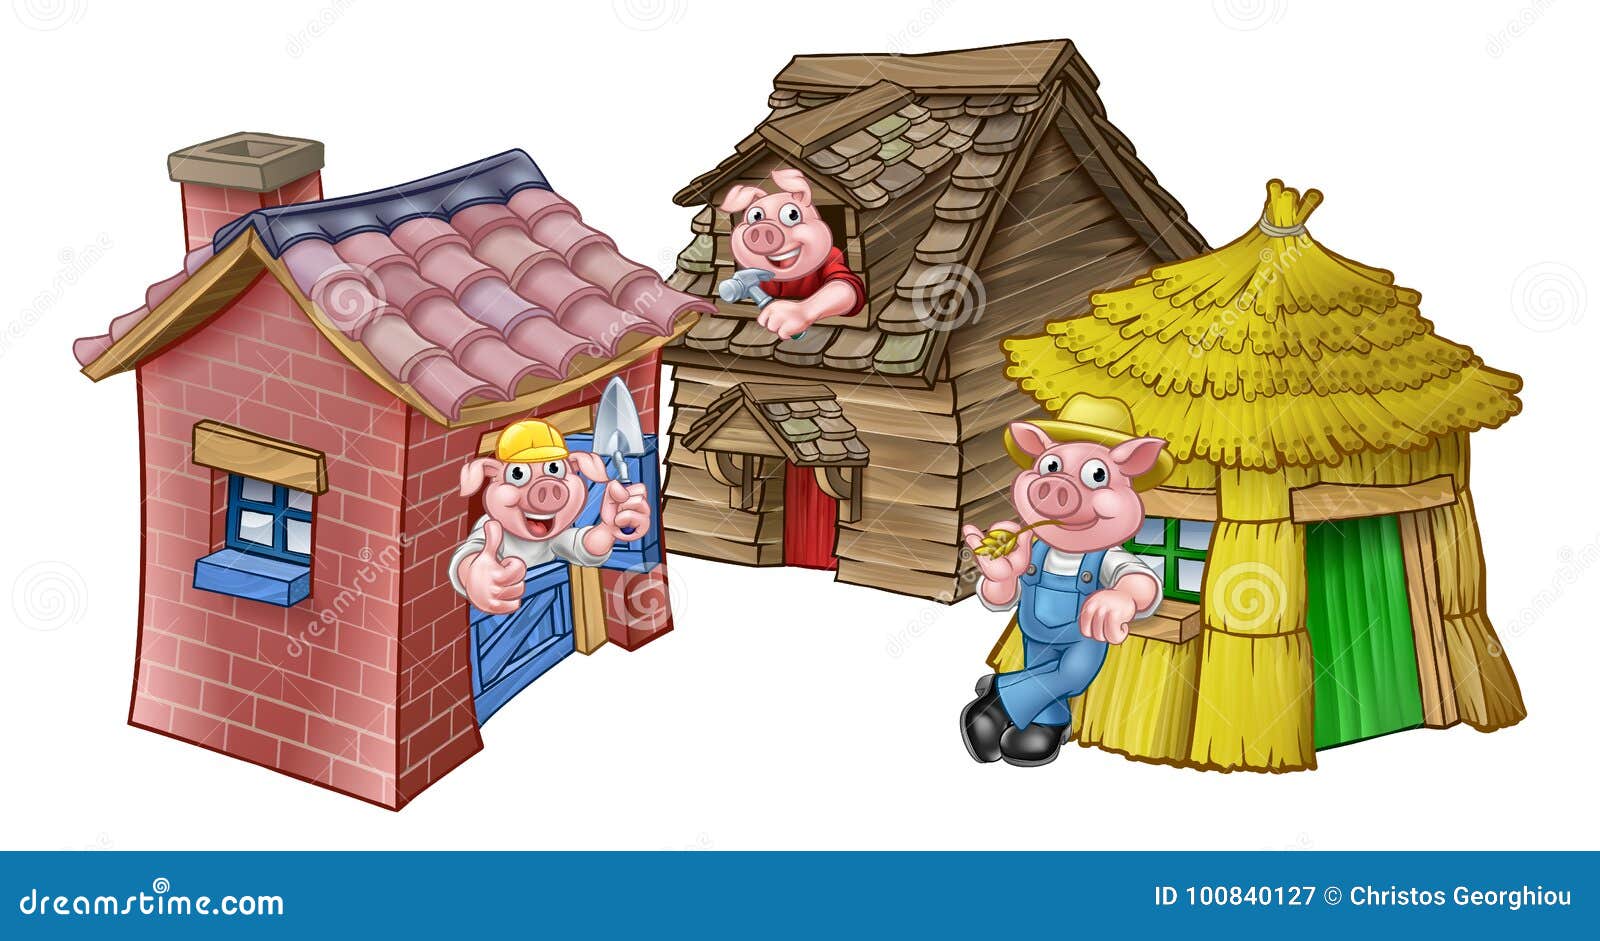 the three little pigs fairytale houses